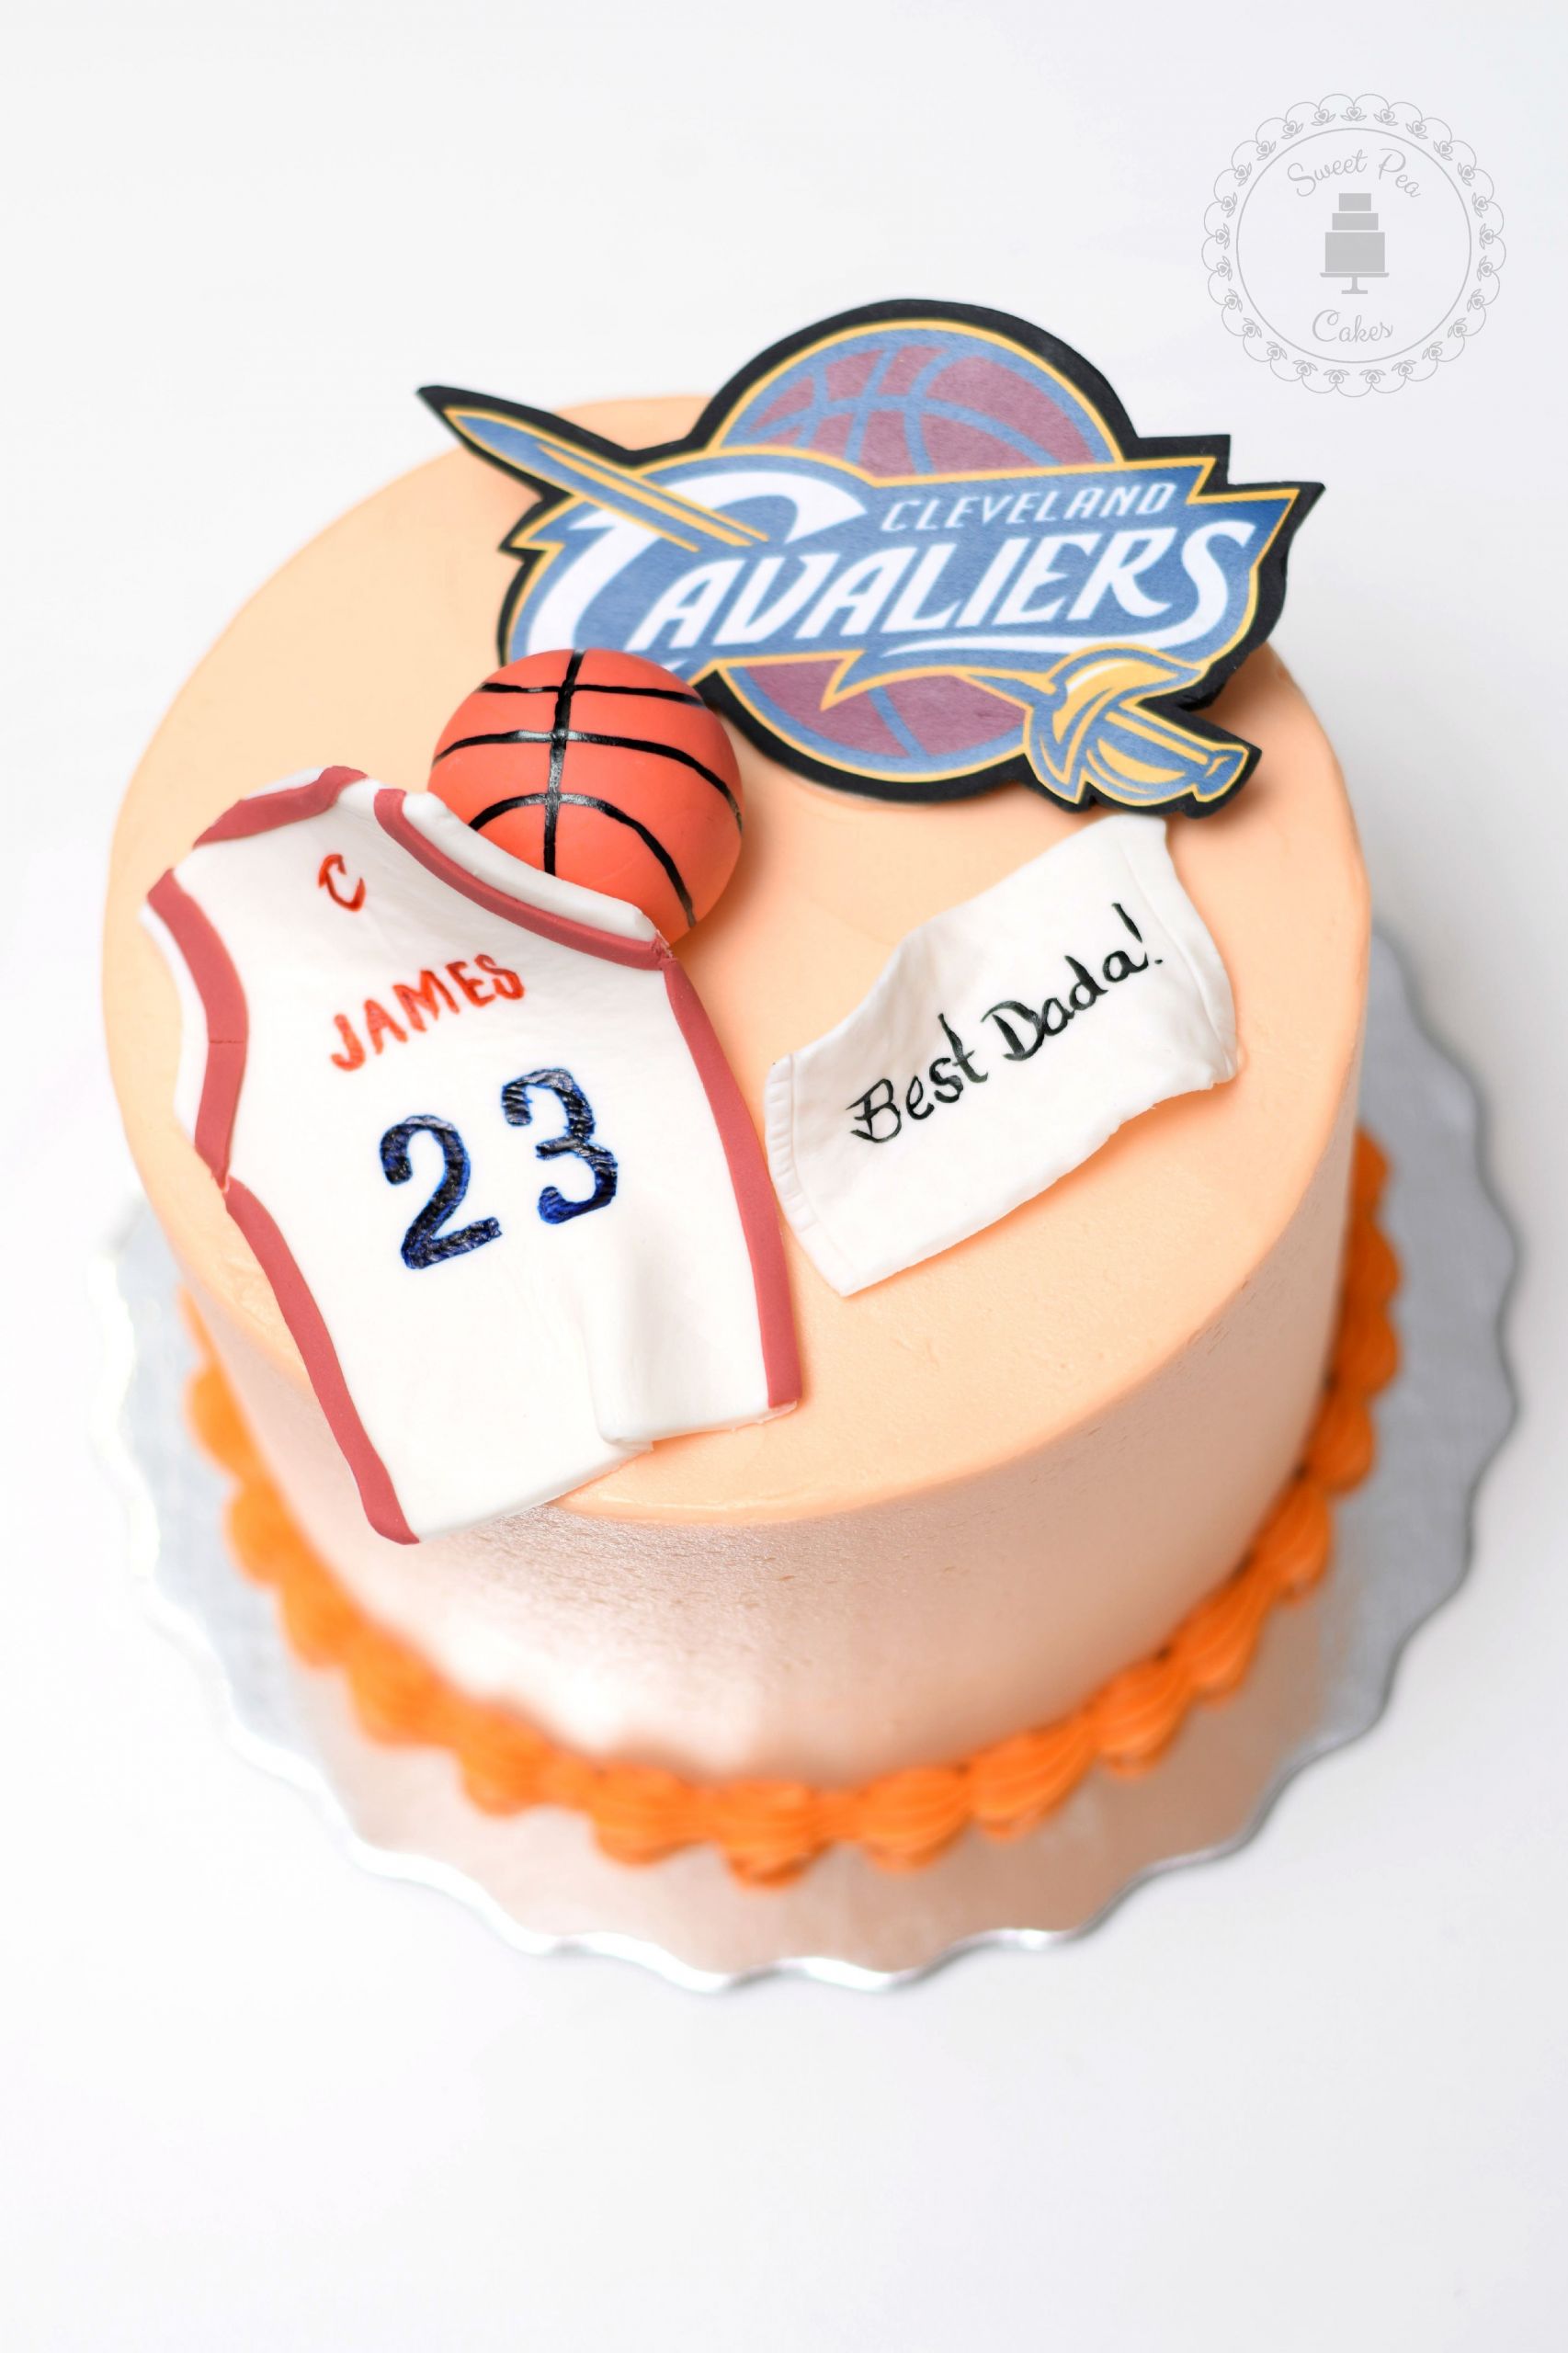 Lebron James Birthday Cake
 Custom basketball theme cake Lebron James Cavaliers